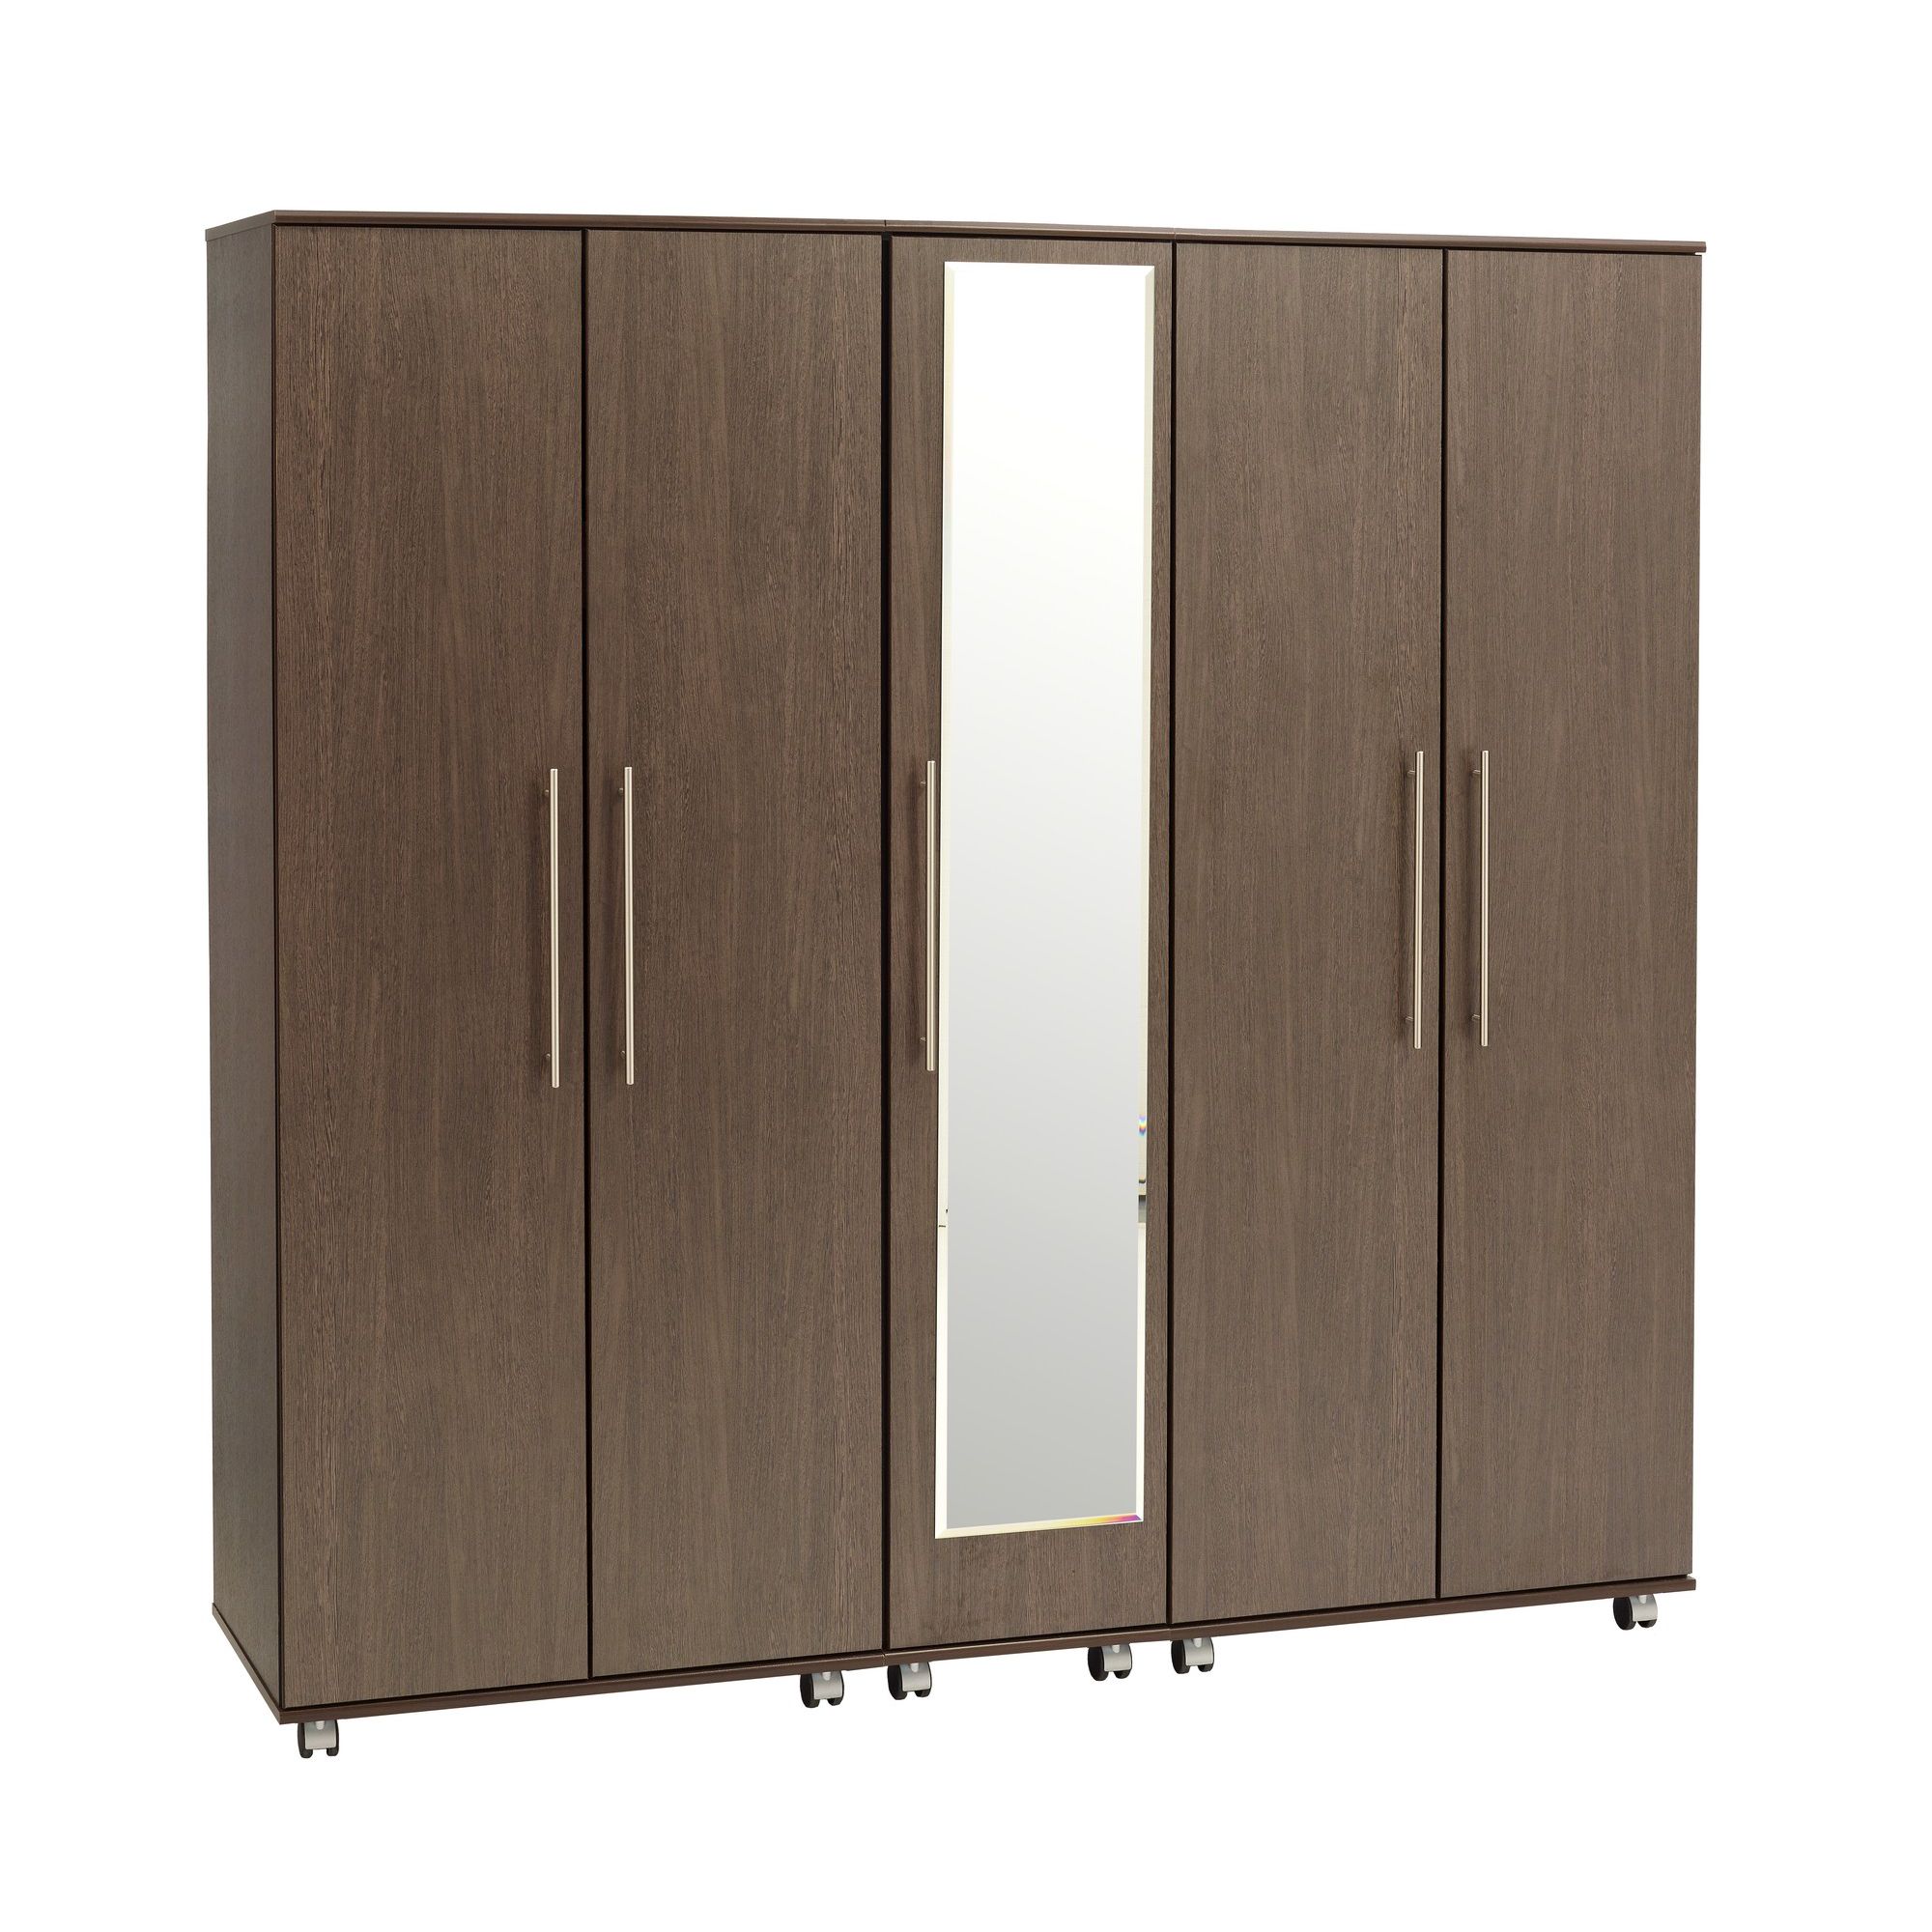 Ideal Furniture New York 5 Door Wardrobe - Beech at Tesco Direct